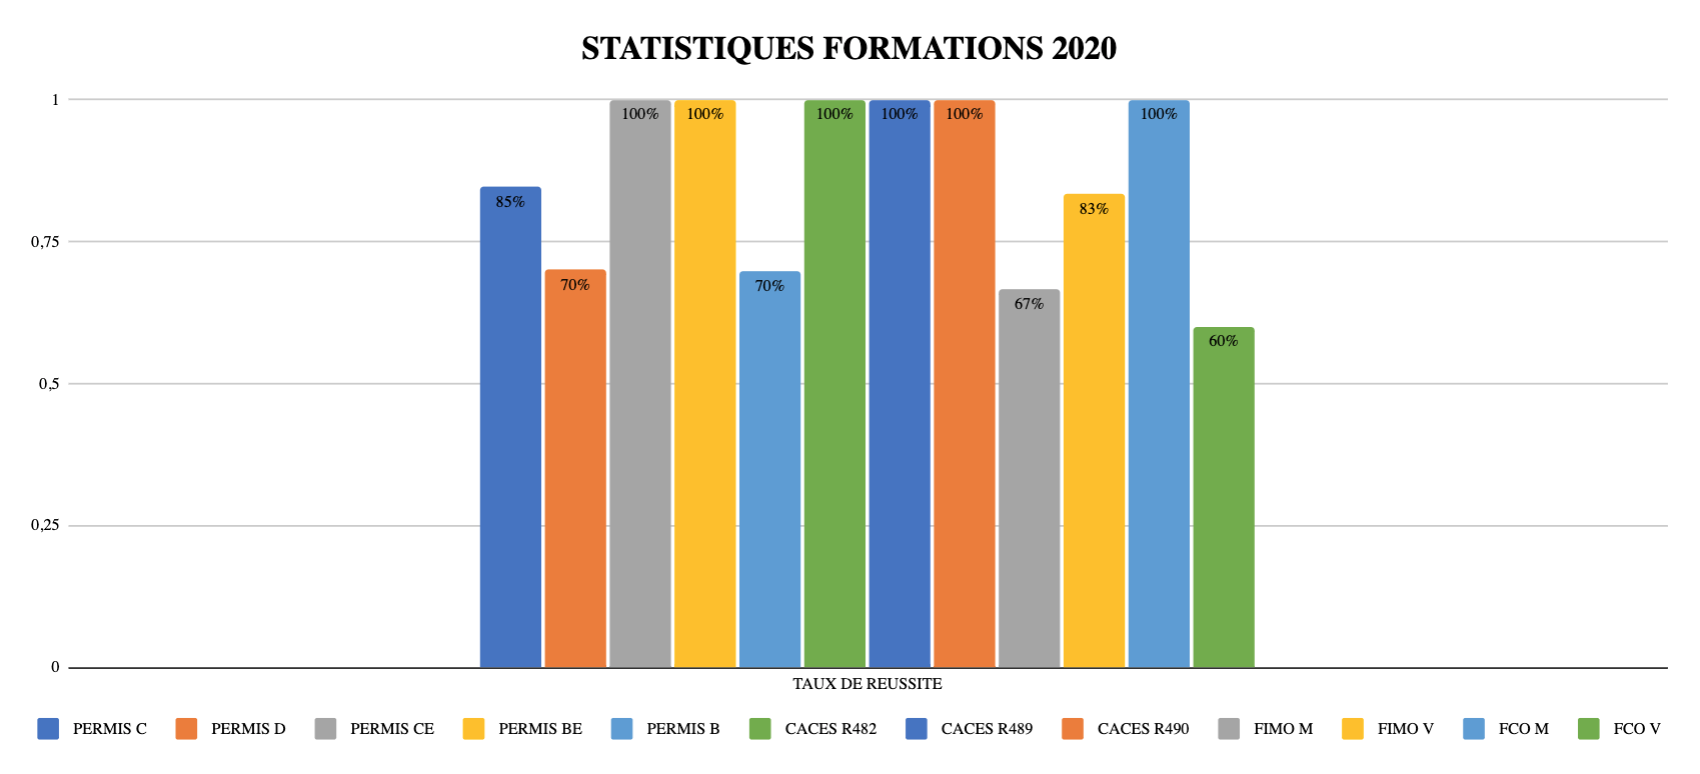 Statistiques RAMASSAMY FORMATION 2020 2021